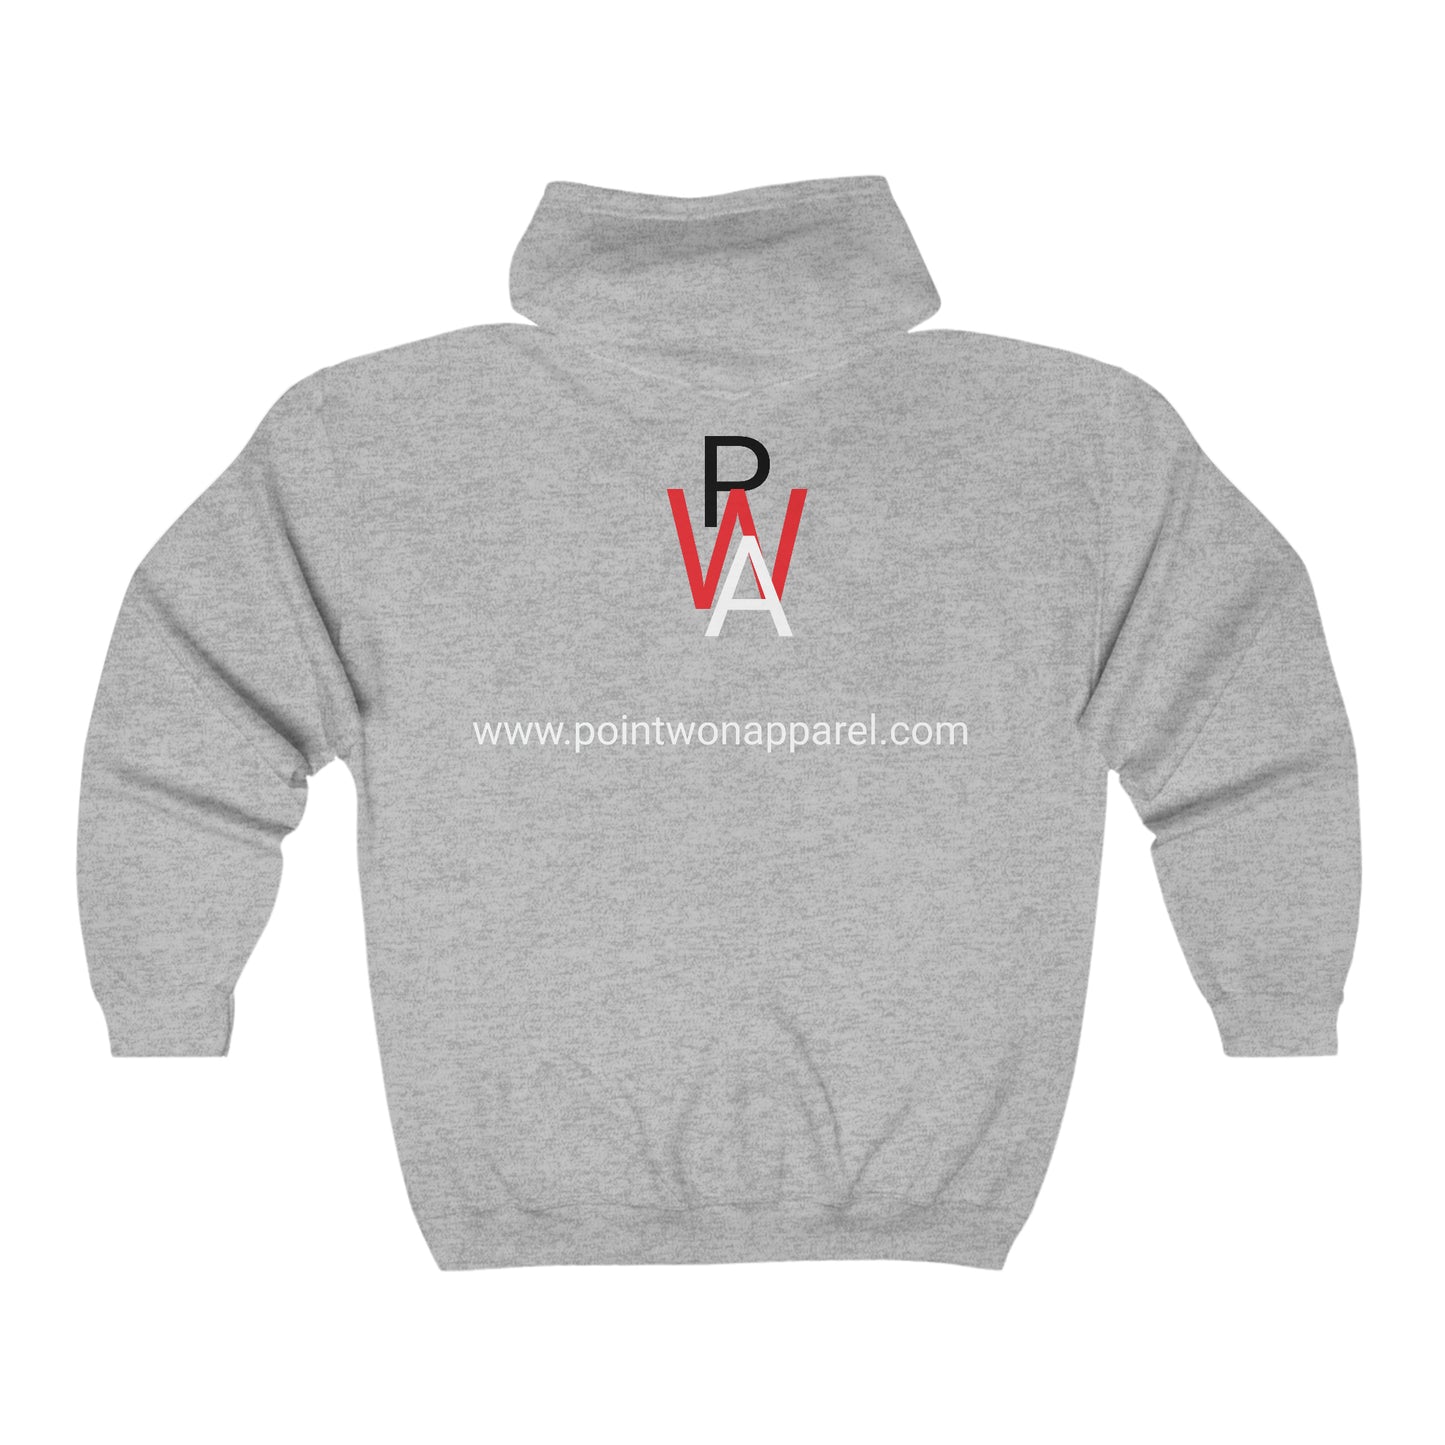 PWA Laid n Paid™ Full Zip Hooded Sweatshirt